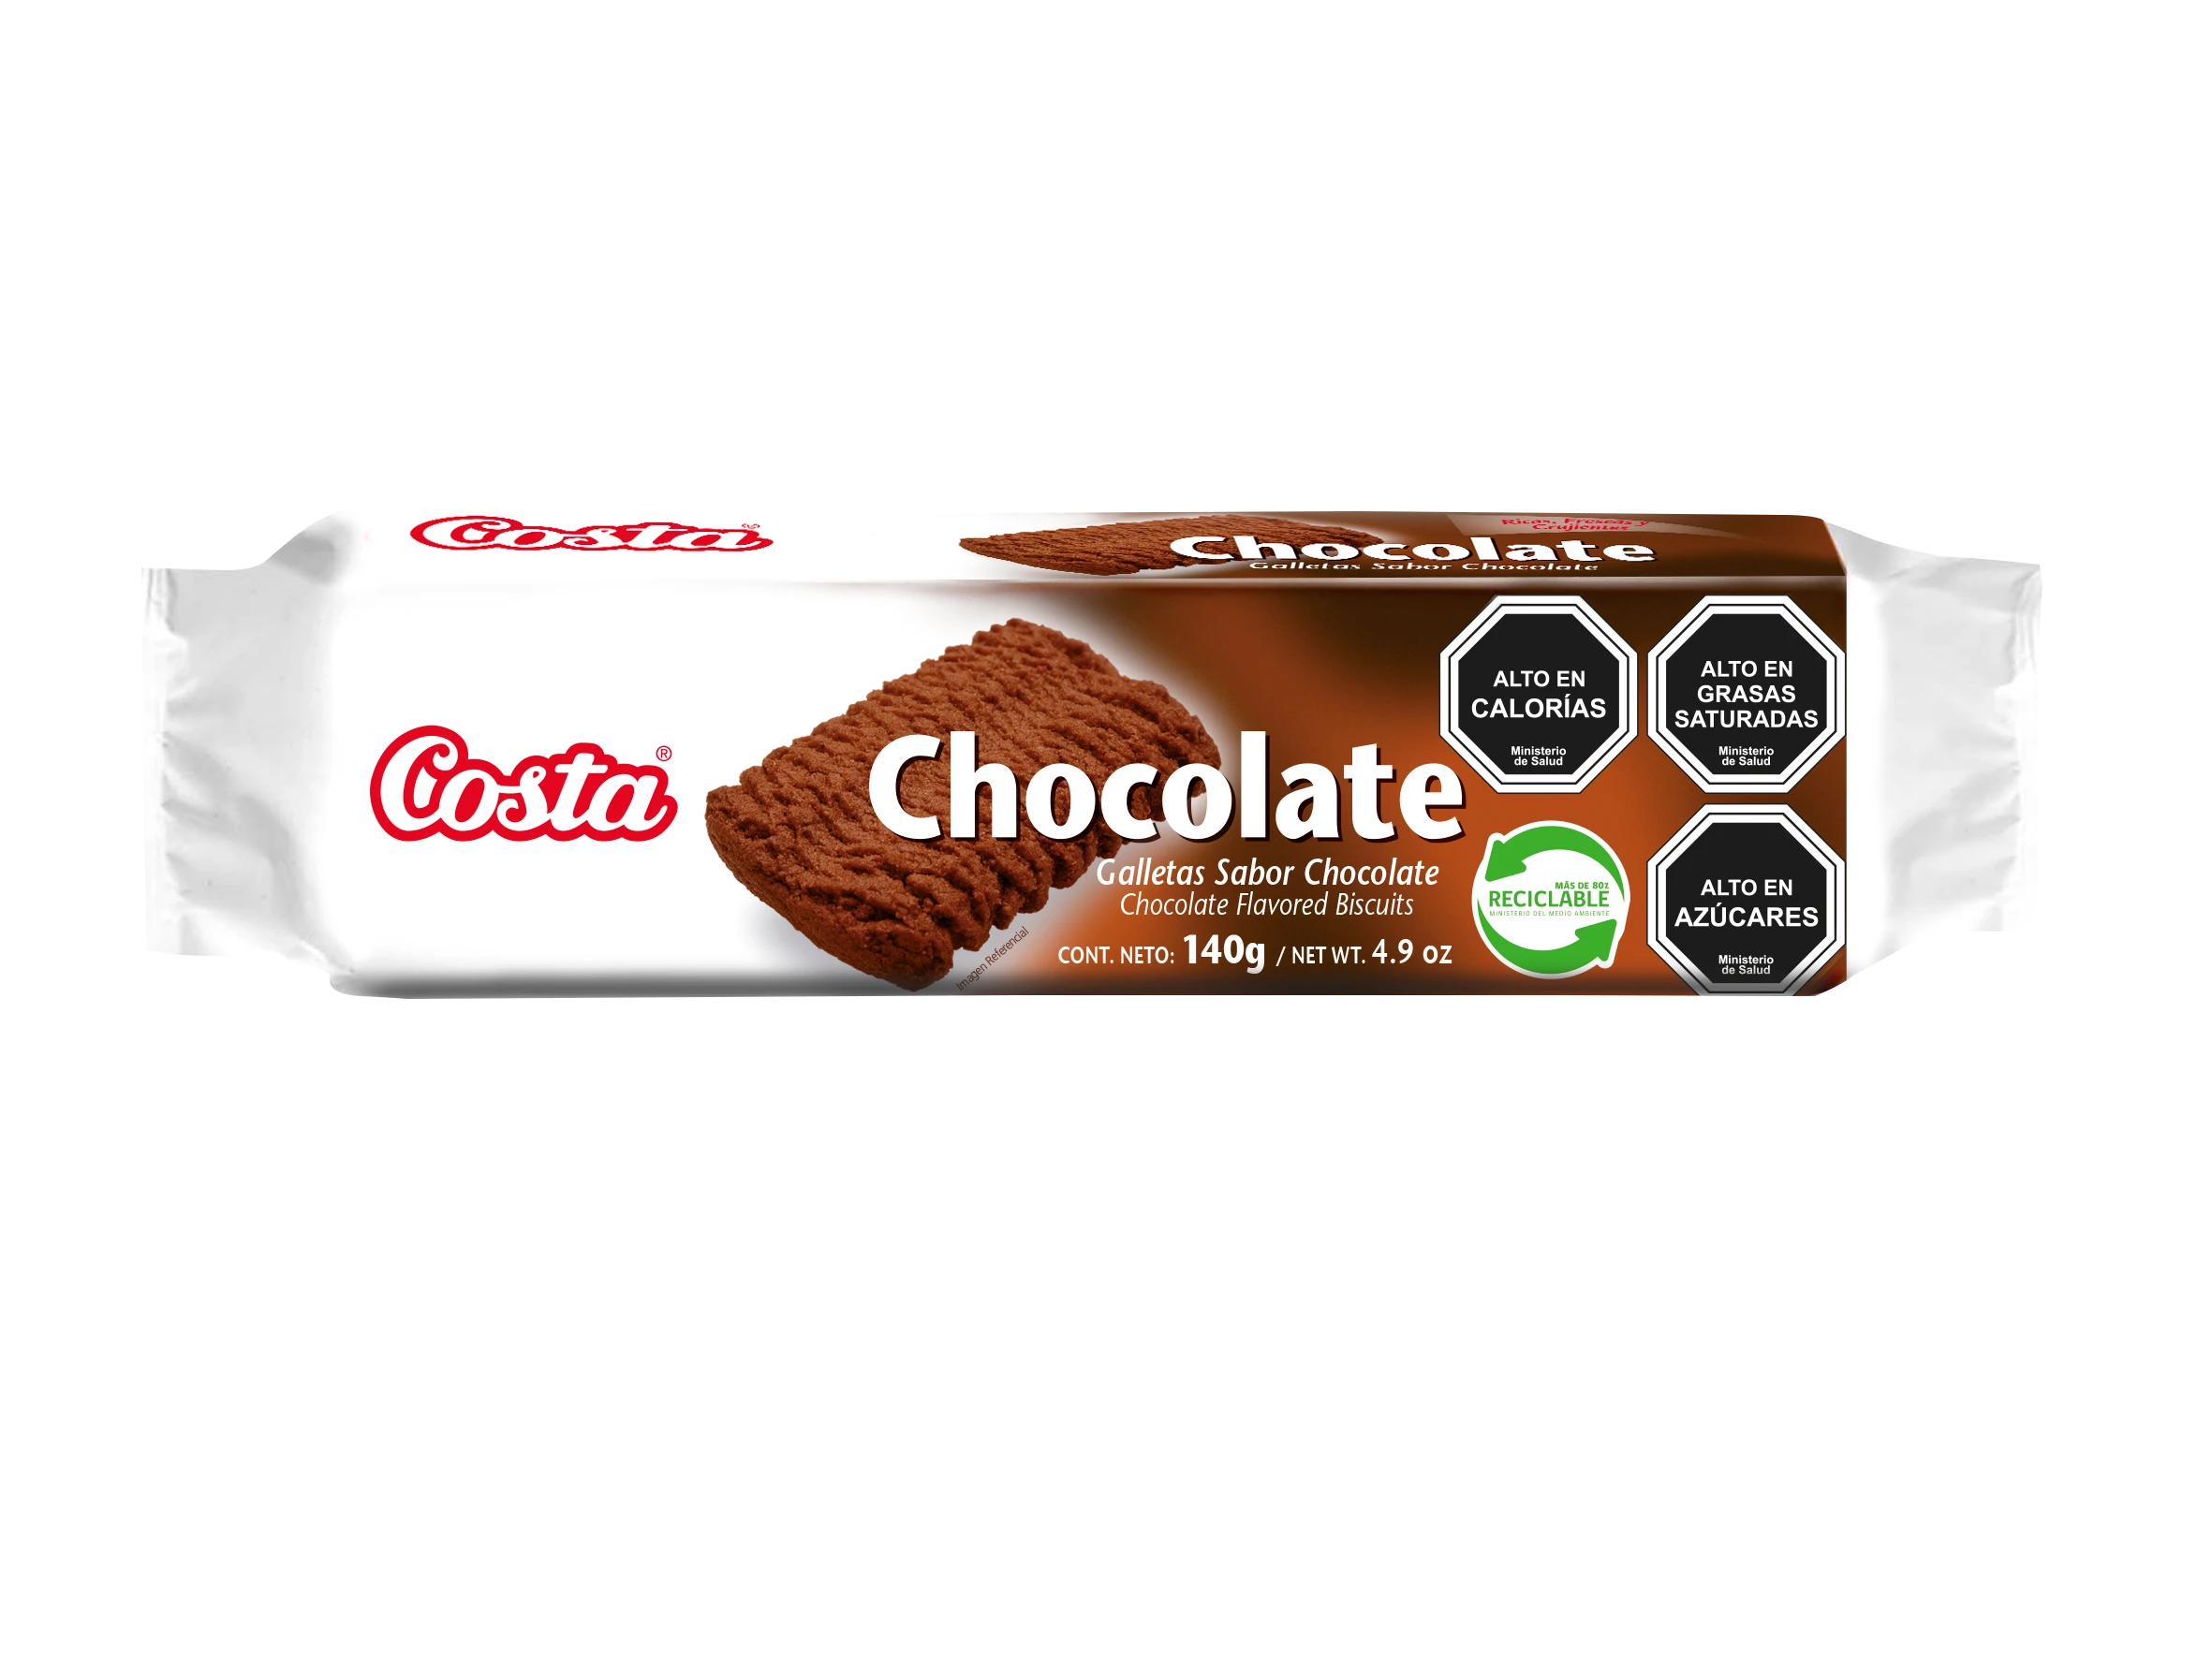 Costa Chocolate